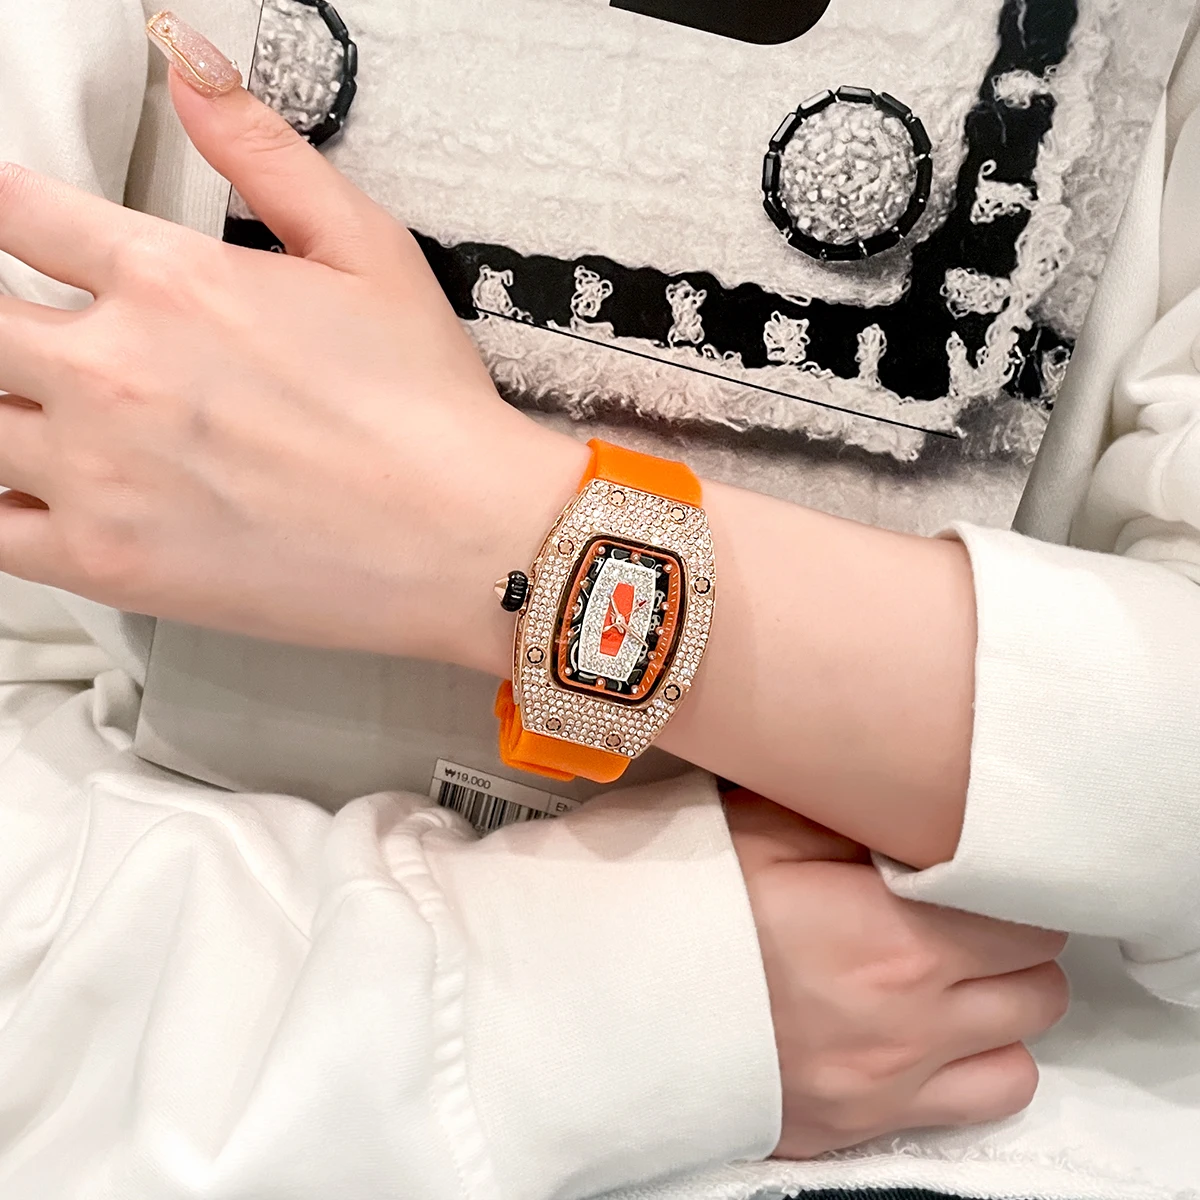 Watches for Women Silicone Strap Sports Quartz Richard Watch Girl's Diamond Wristwatch Reloj Mujer Elegante Free Shipping enlarge